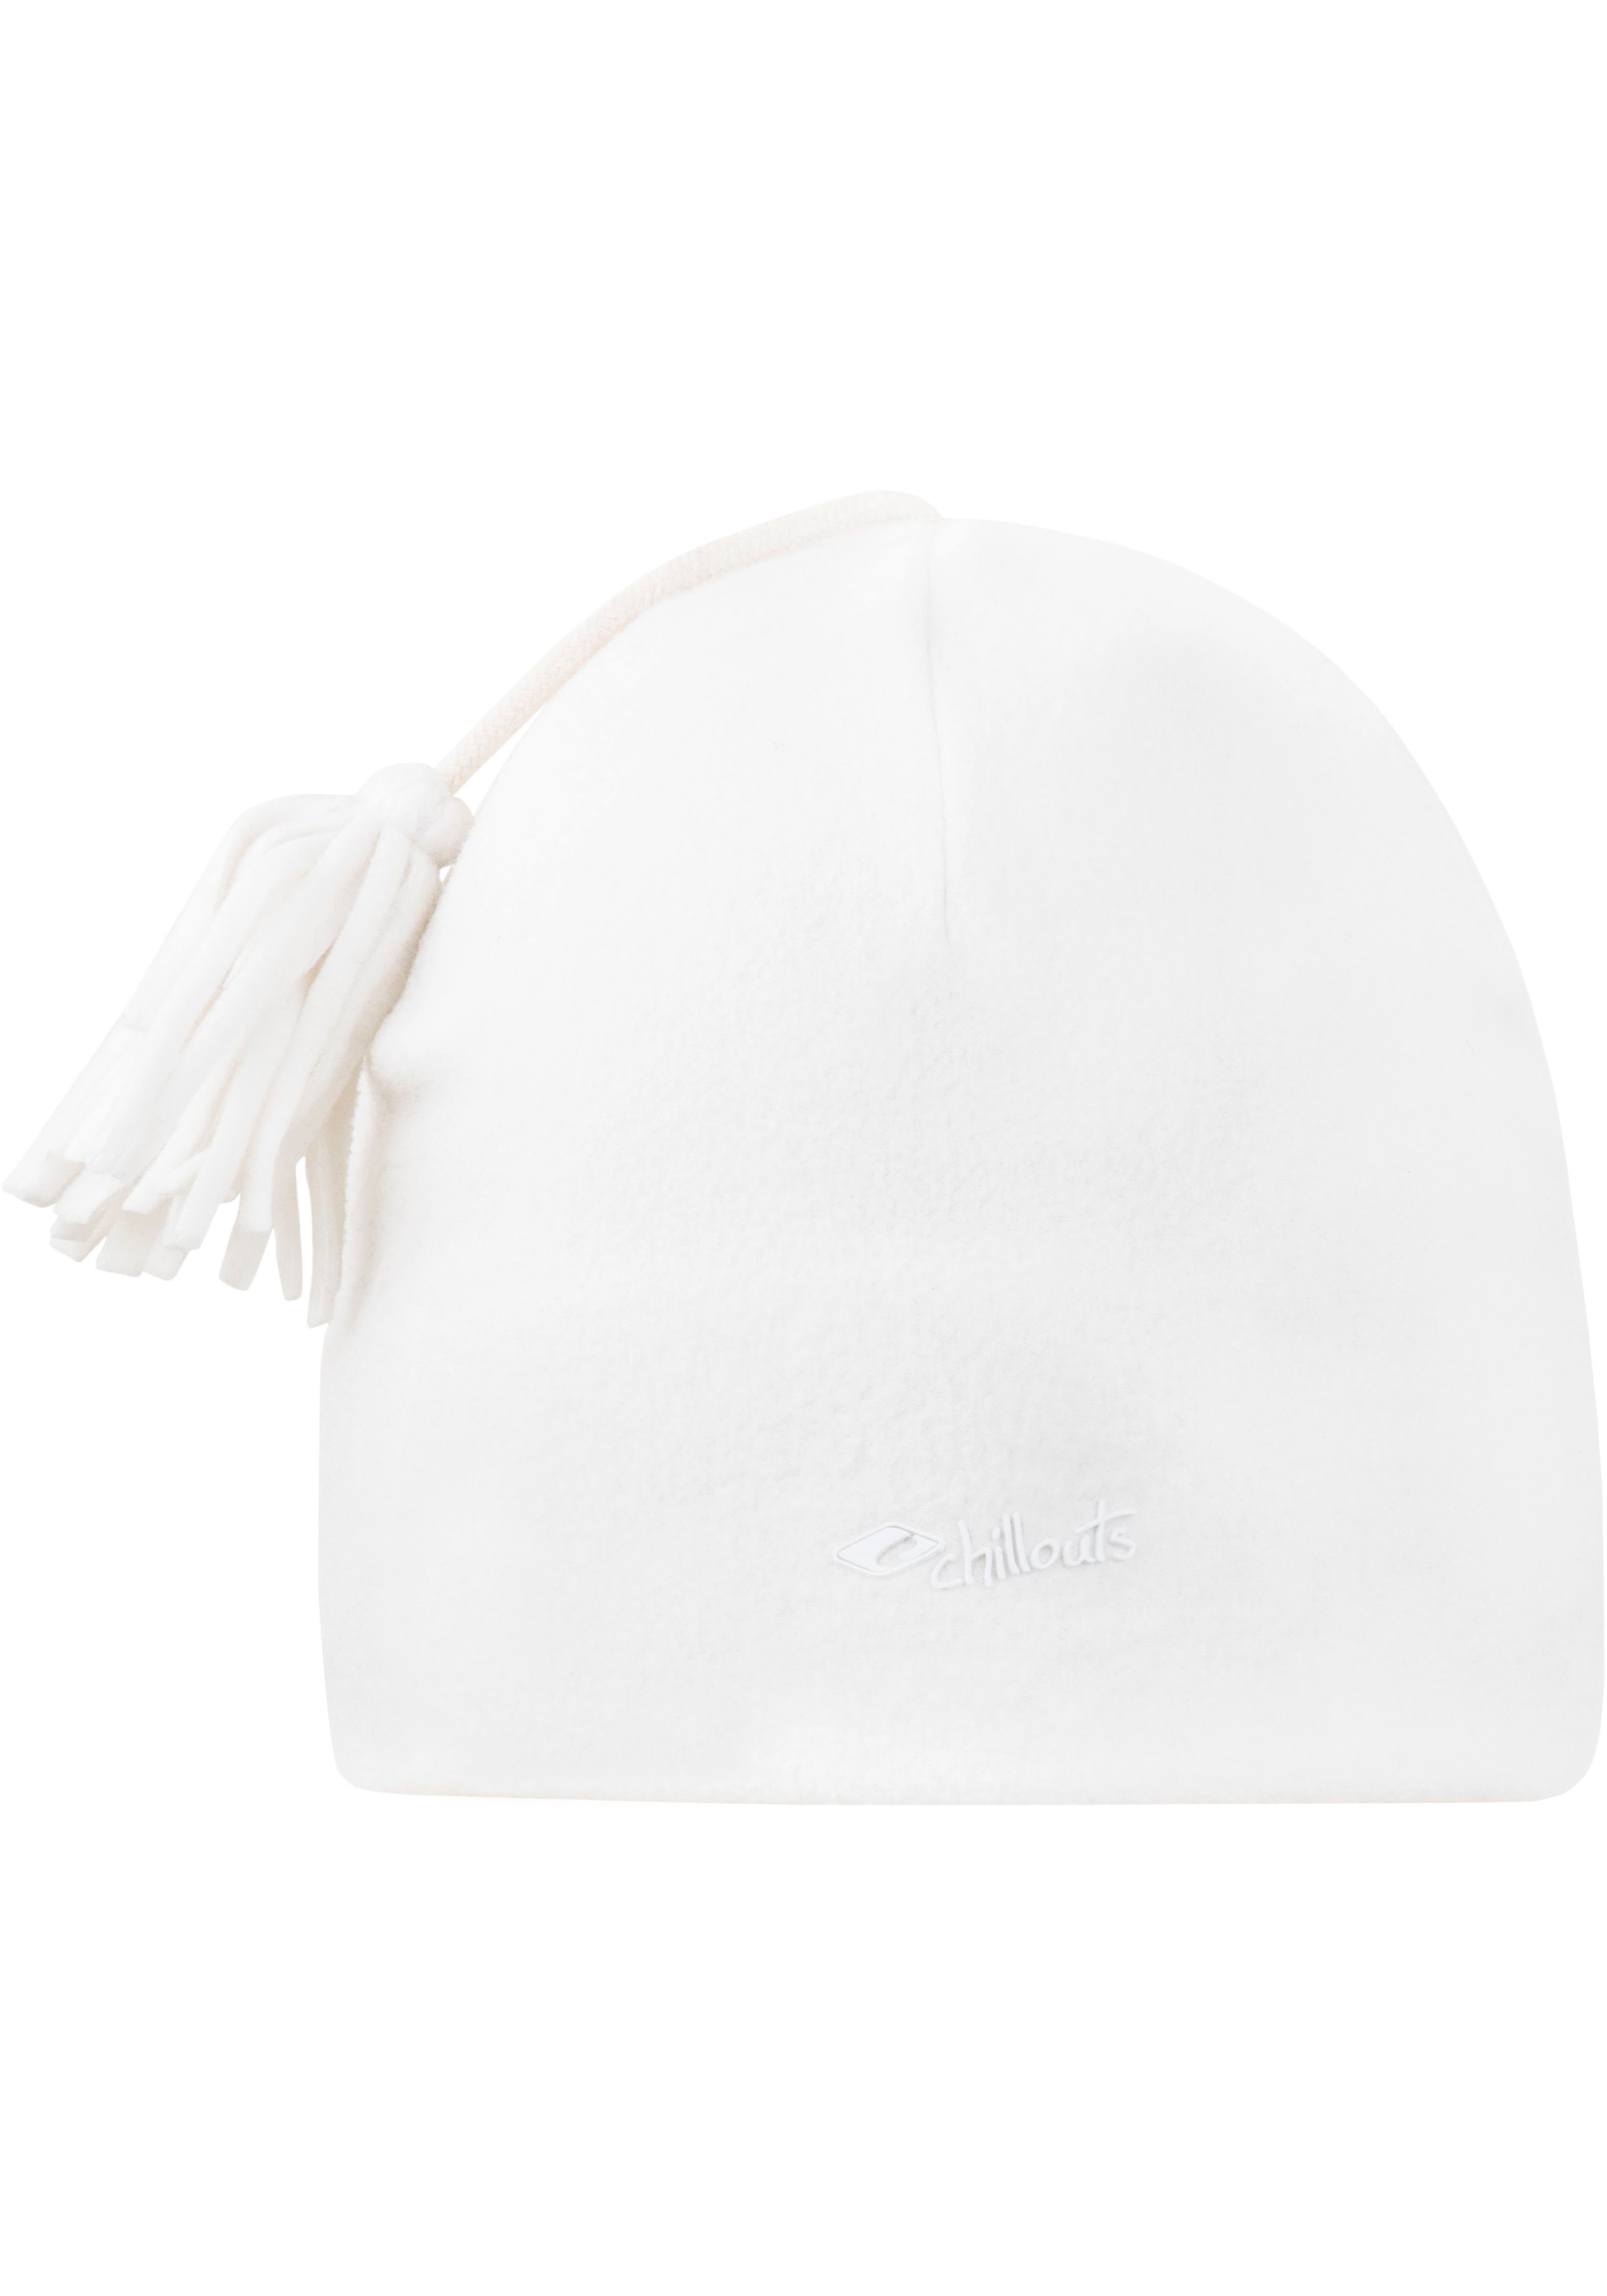 chillouts Fleecemütze Freeze Fleece Pom Hat white